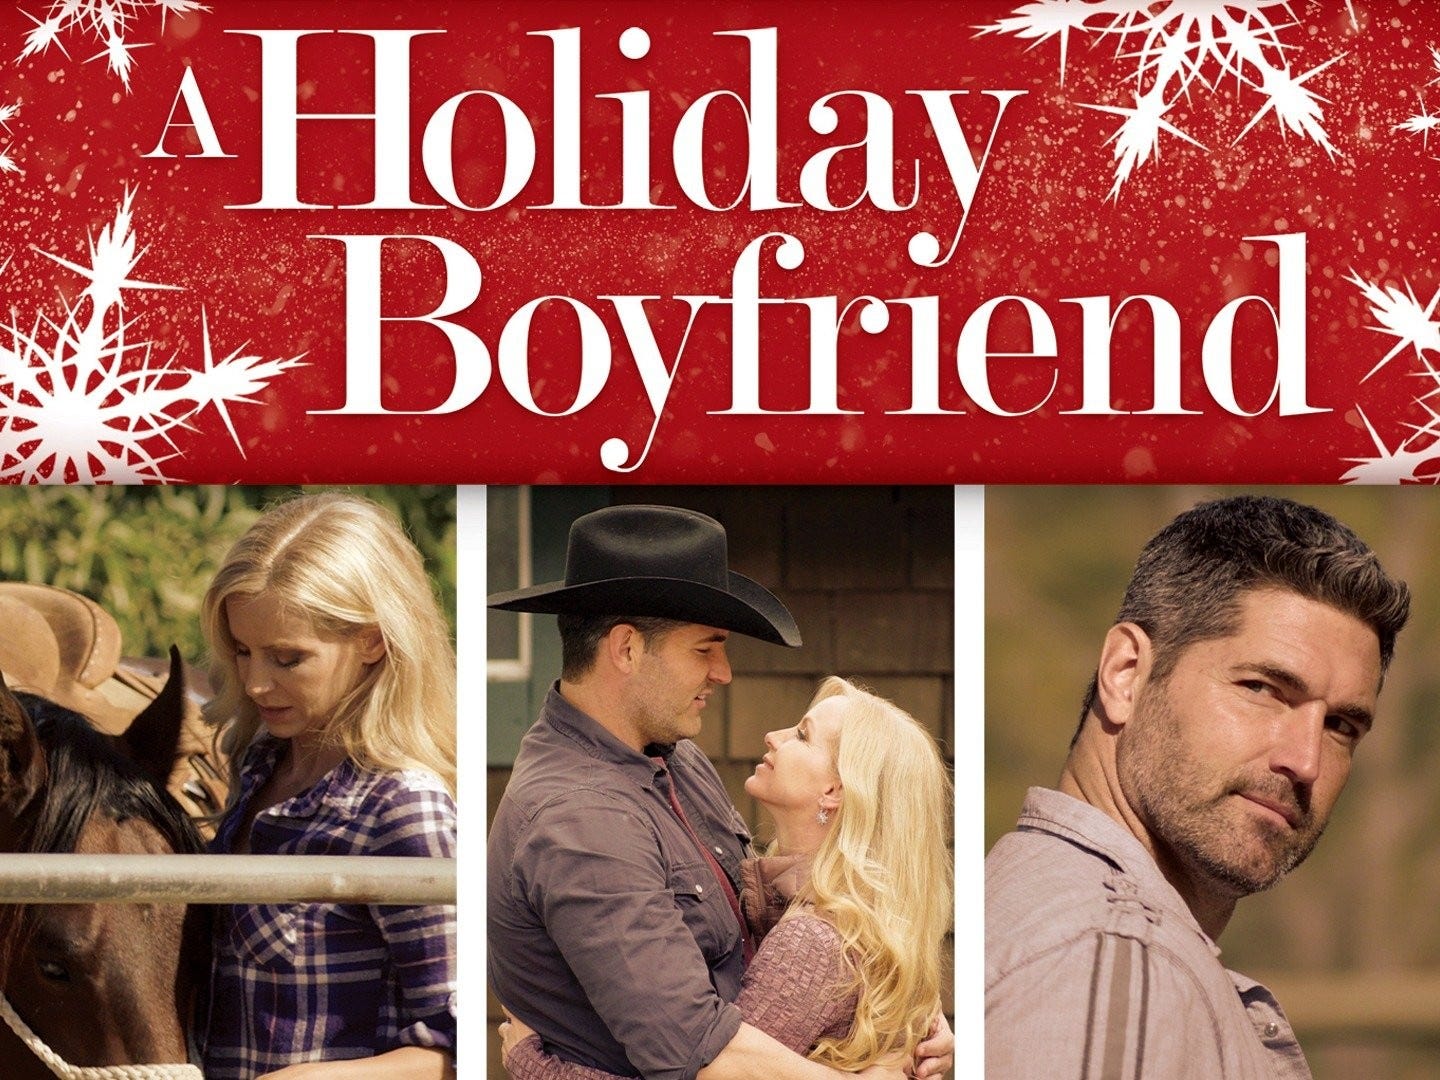 A Holiday Boyfriend - Rotten Tomatoes